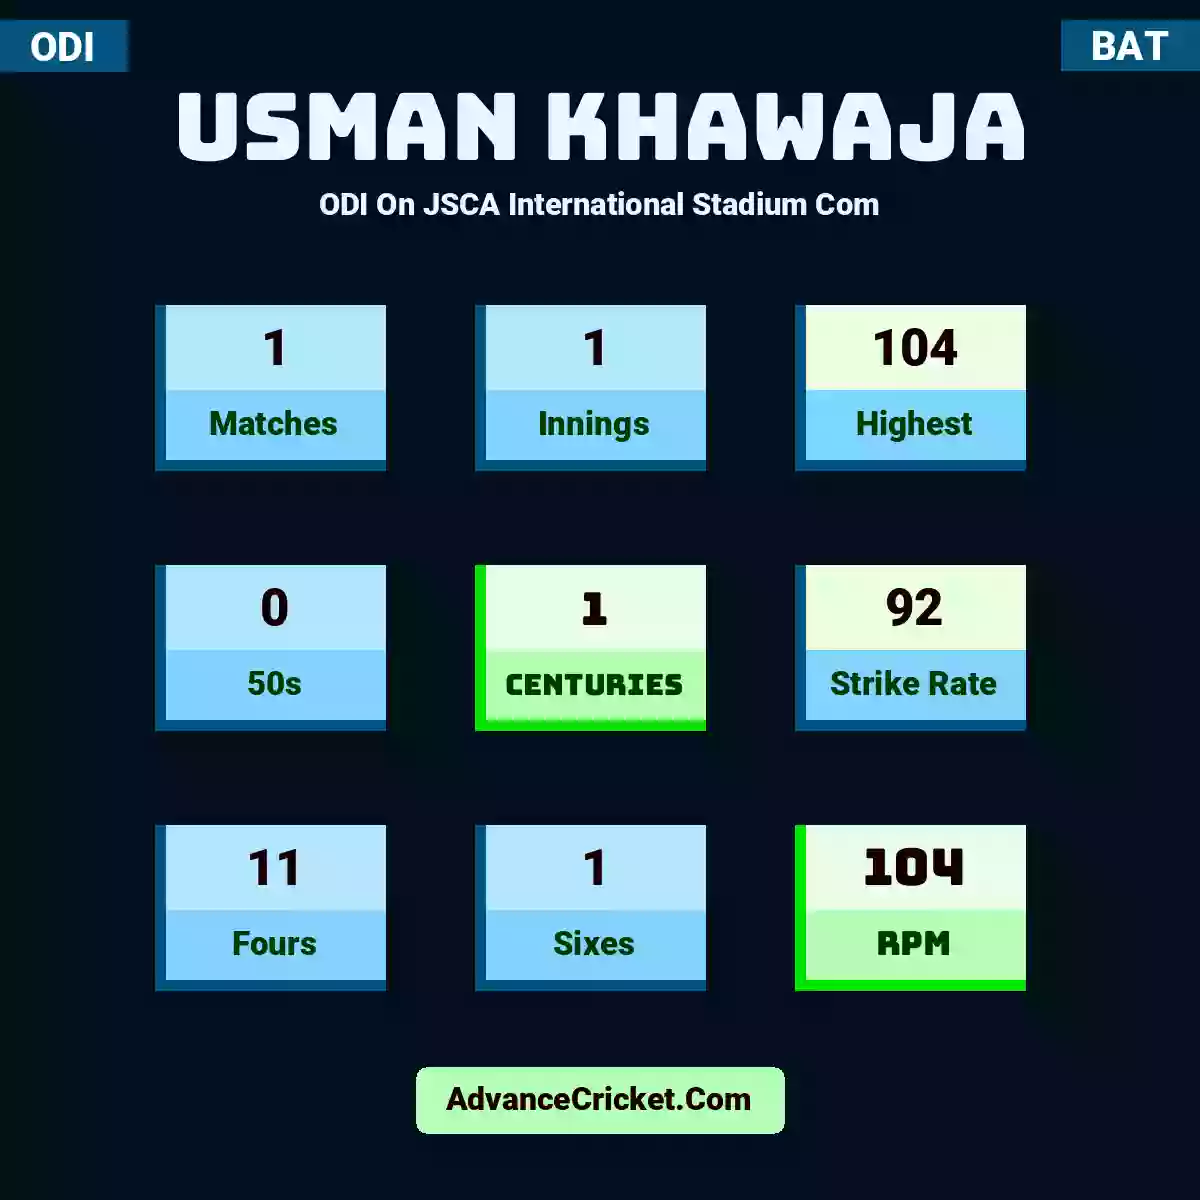 Usman Khawaja ODI  On JSCA International Stadium Com, Usman Khawaja played 1 matches, scored 104 runs as highest, 0 half-centuries, and 1 centuries, with a strike rate of 92. U.Khawaja hit 11 fours and 1 sixes, with an RPM of 104.